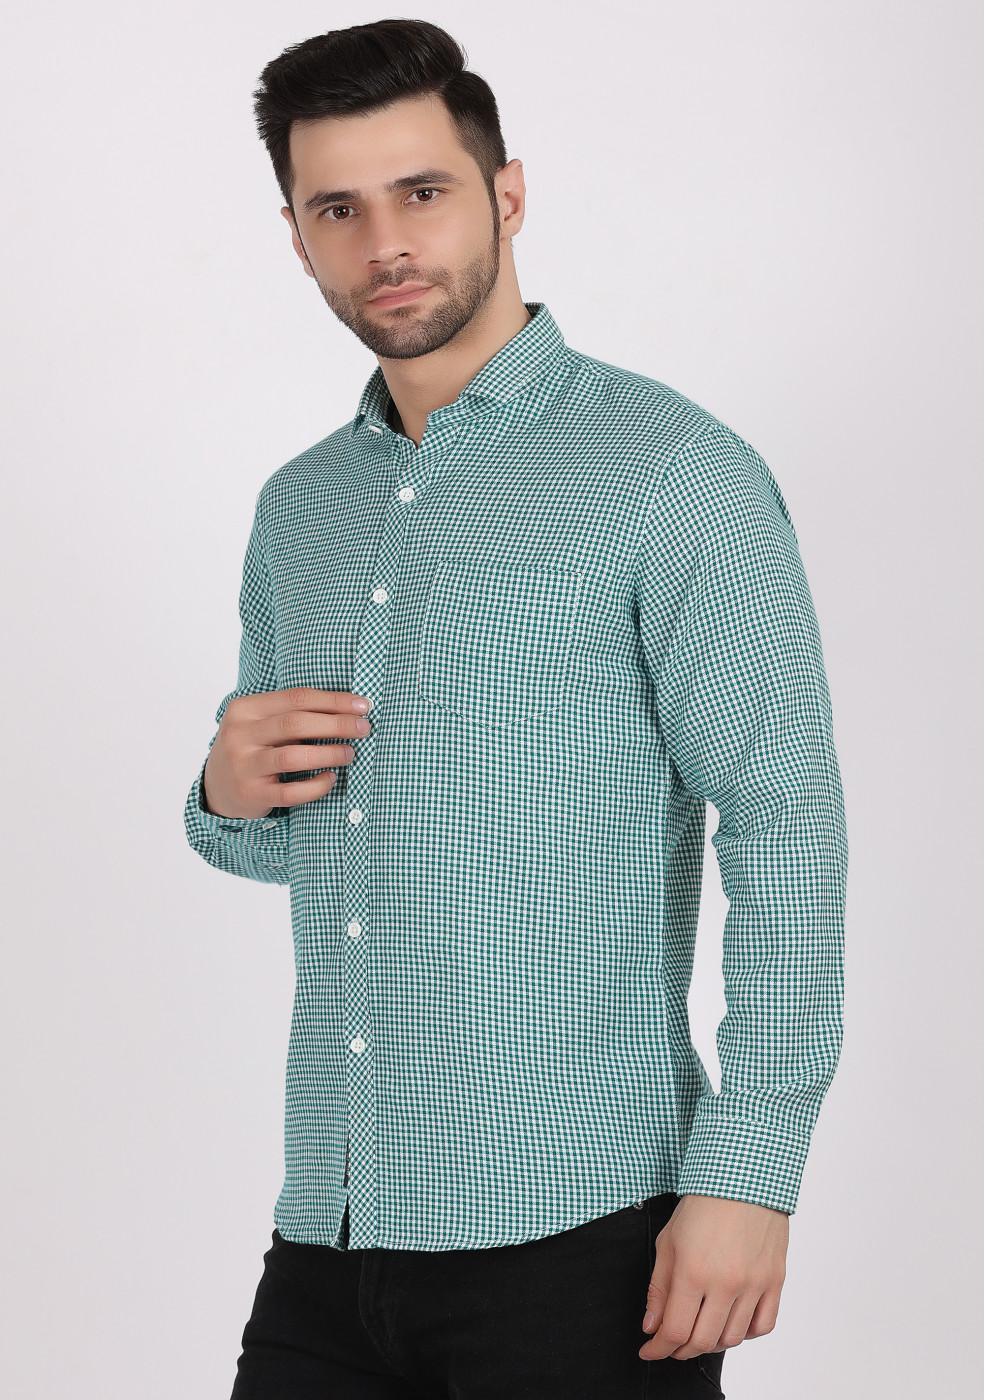 ASHTOM Green Color Small Check Shirt For Men